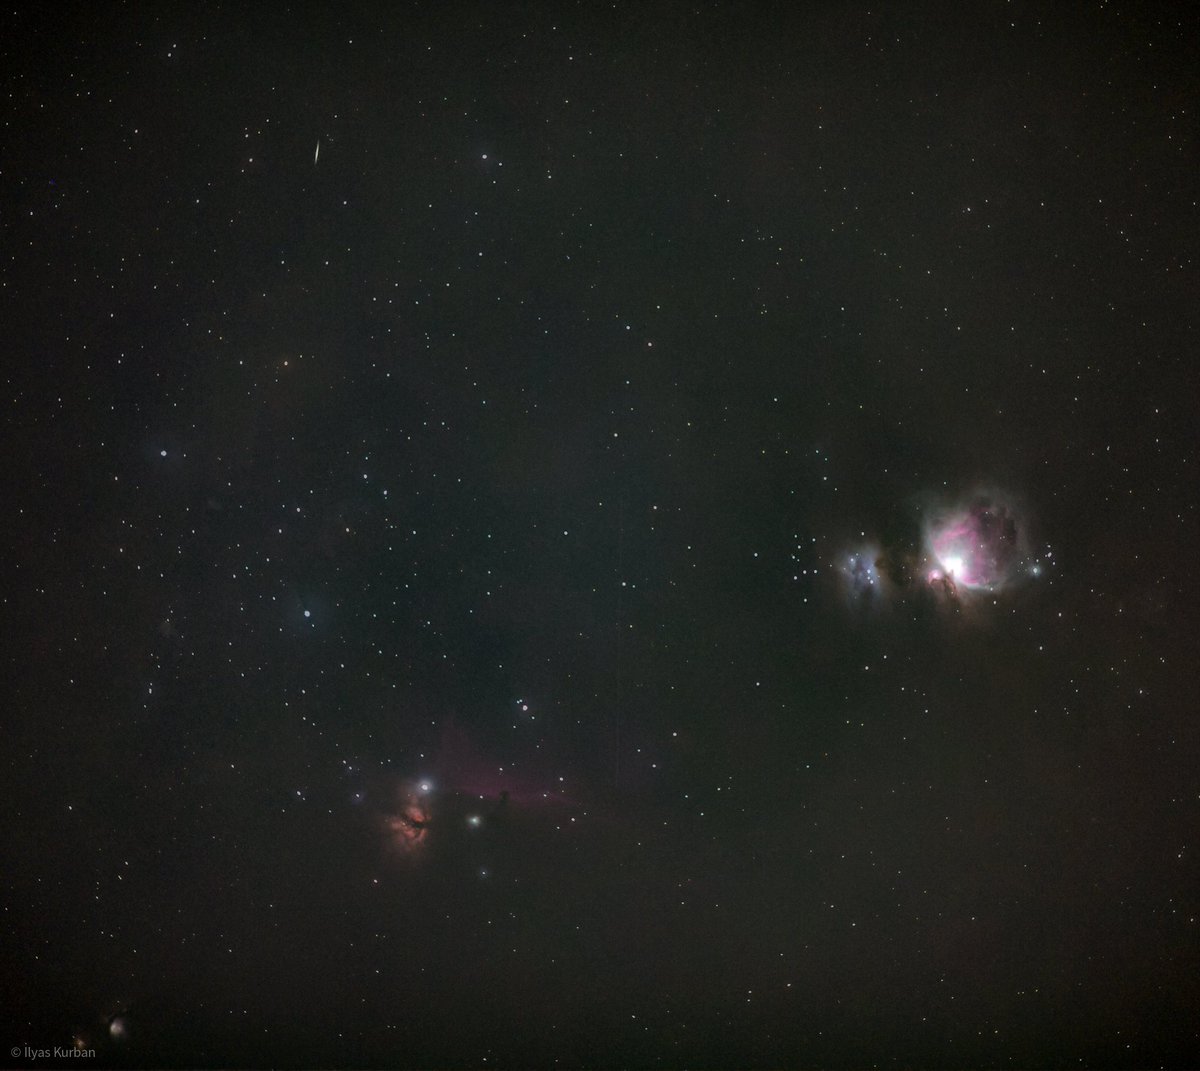 Orion season has started.
@AstroPhotoTurk 
#Astrophotography
#orionconstellation 
#deepsky 
#astrophotography 
5×30 sec
#canon200mmf28l 
#staradventurer 
#canonrp